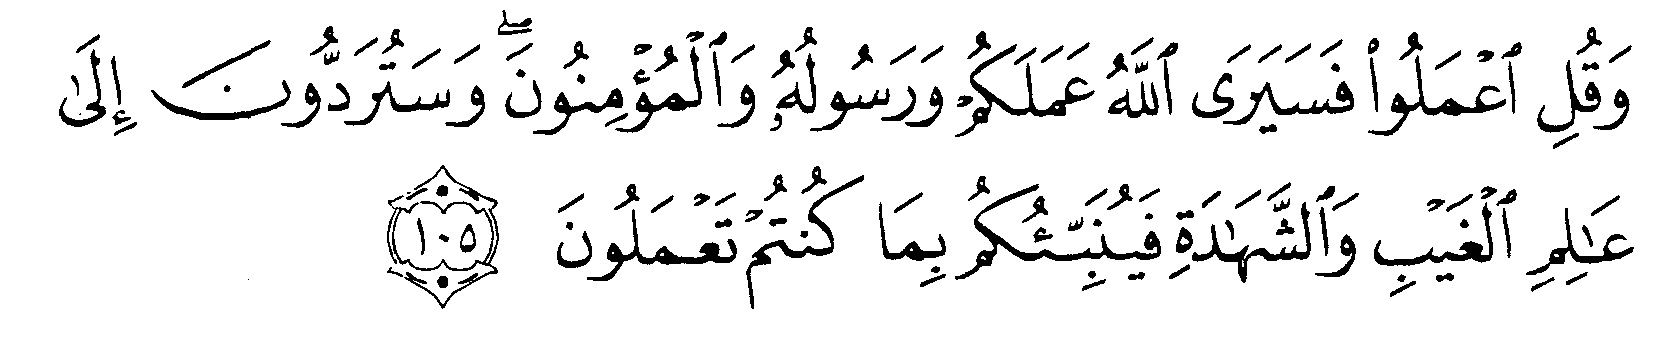 Image result for at taubah ayat 105